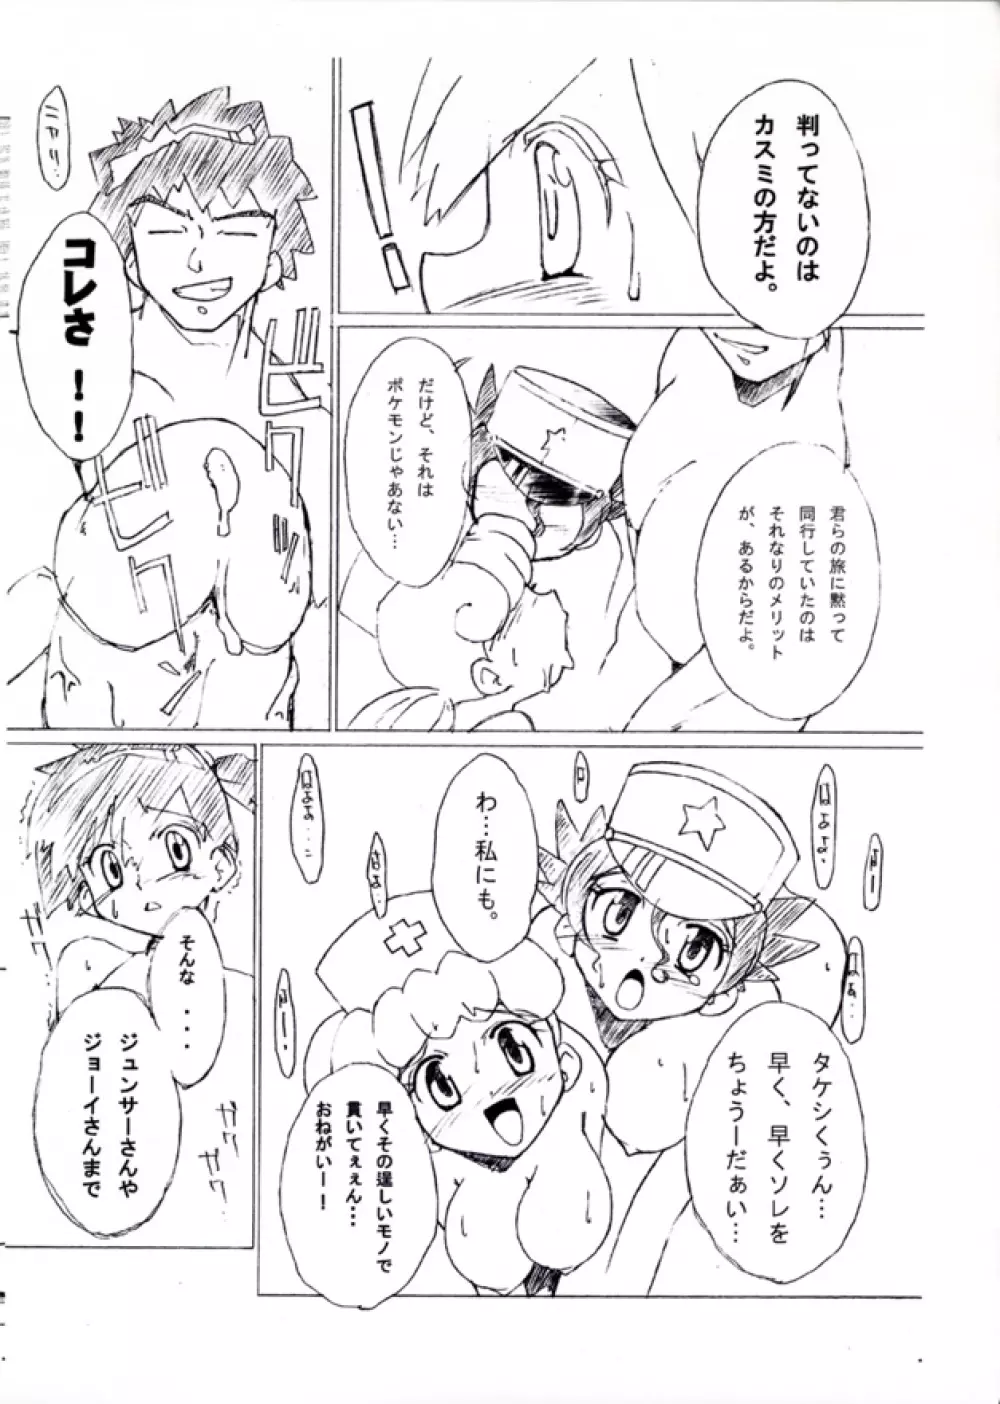 KASUMIX XPLOSION Kasumi Comic part5 - page31